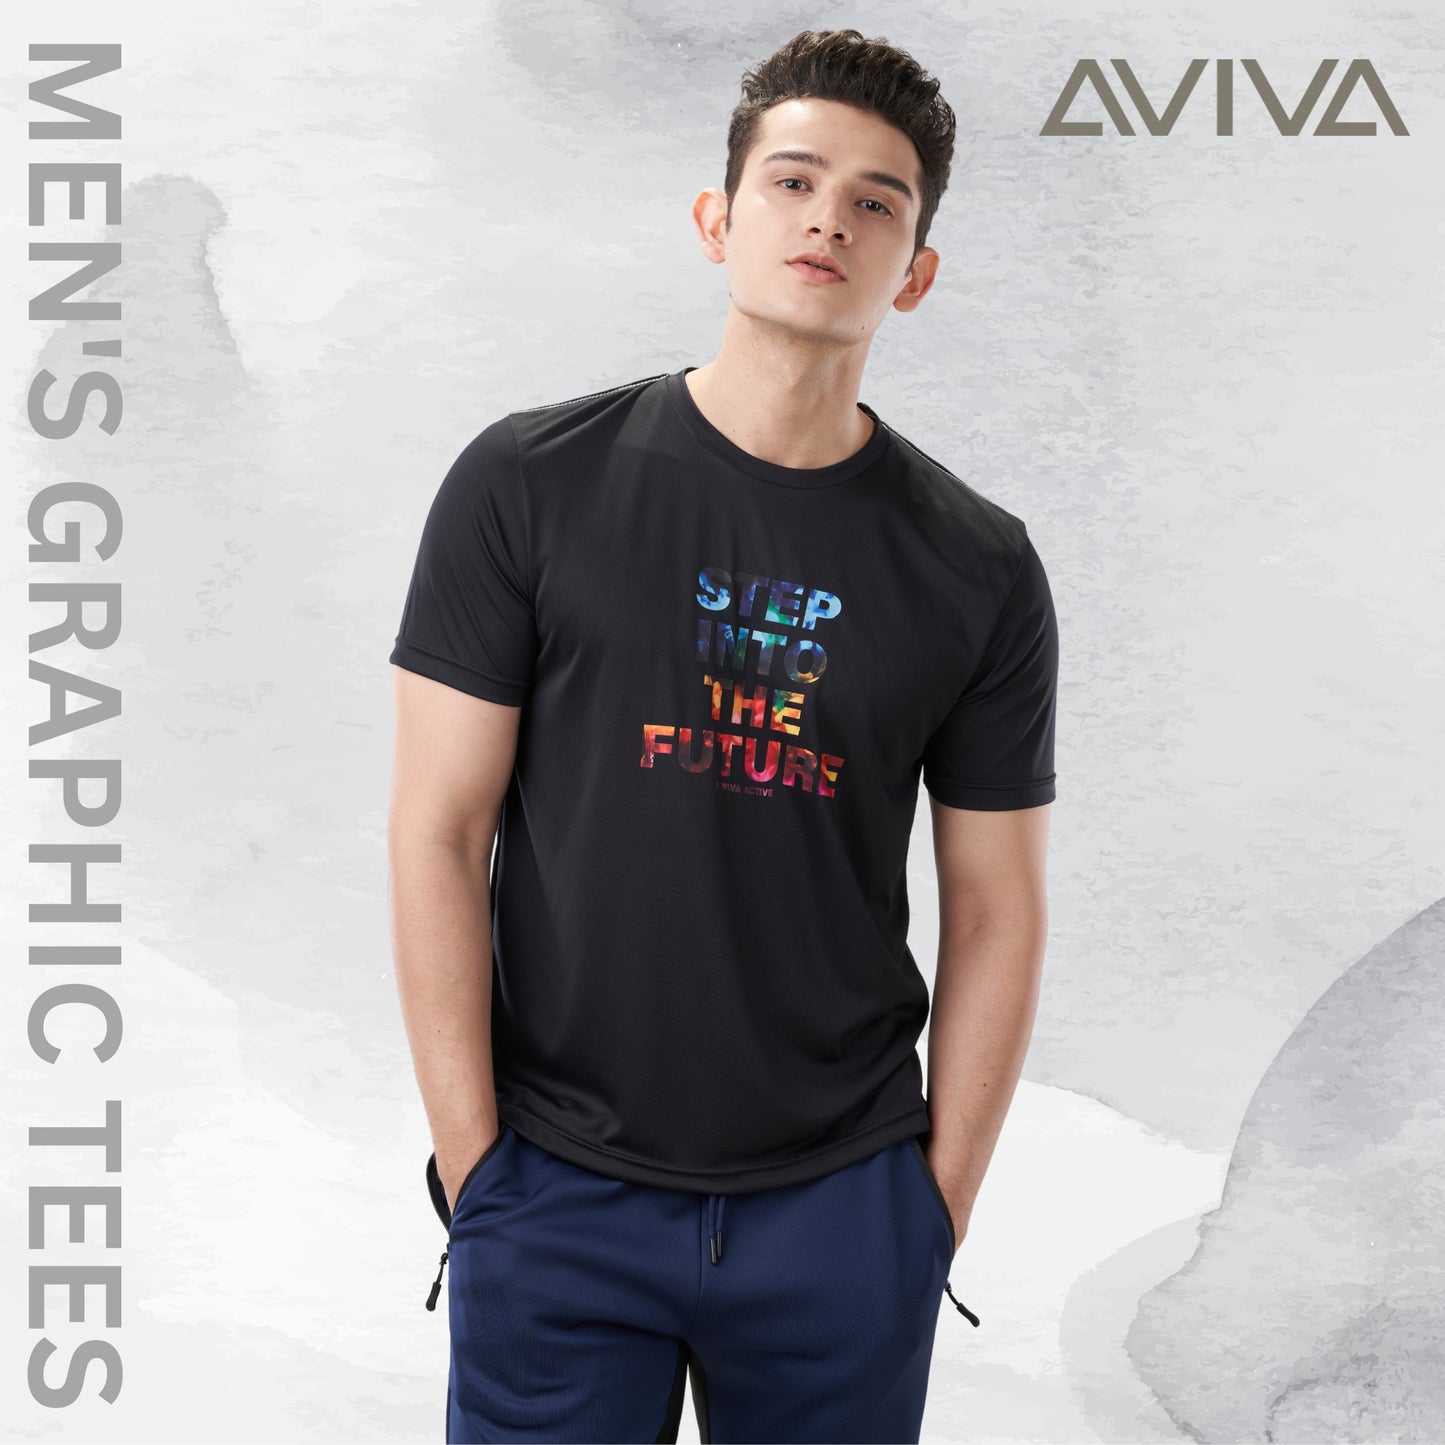 Aviva Men's Graphic Short Sleeve Tee (91-8045)